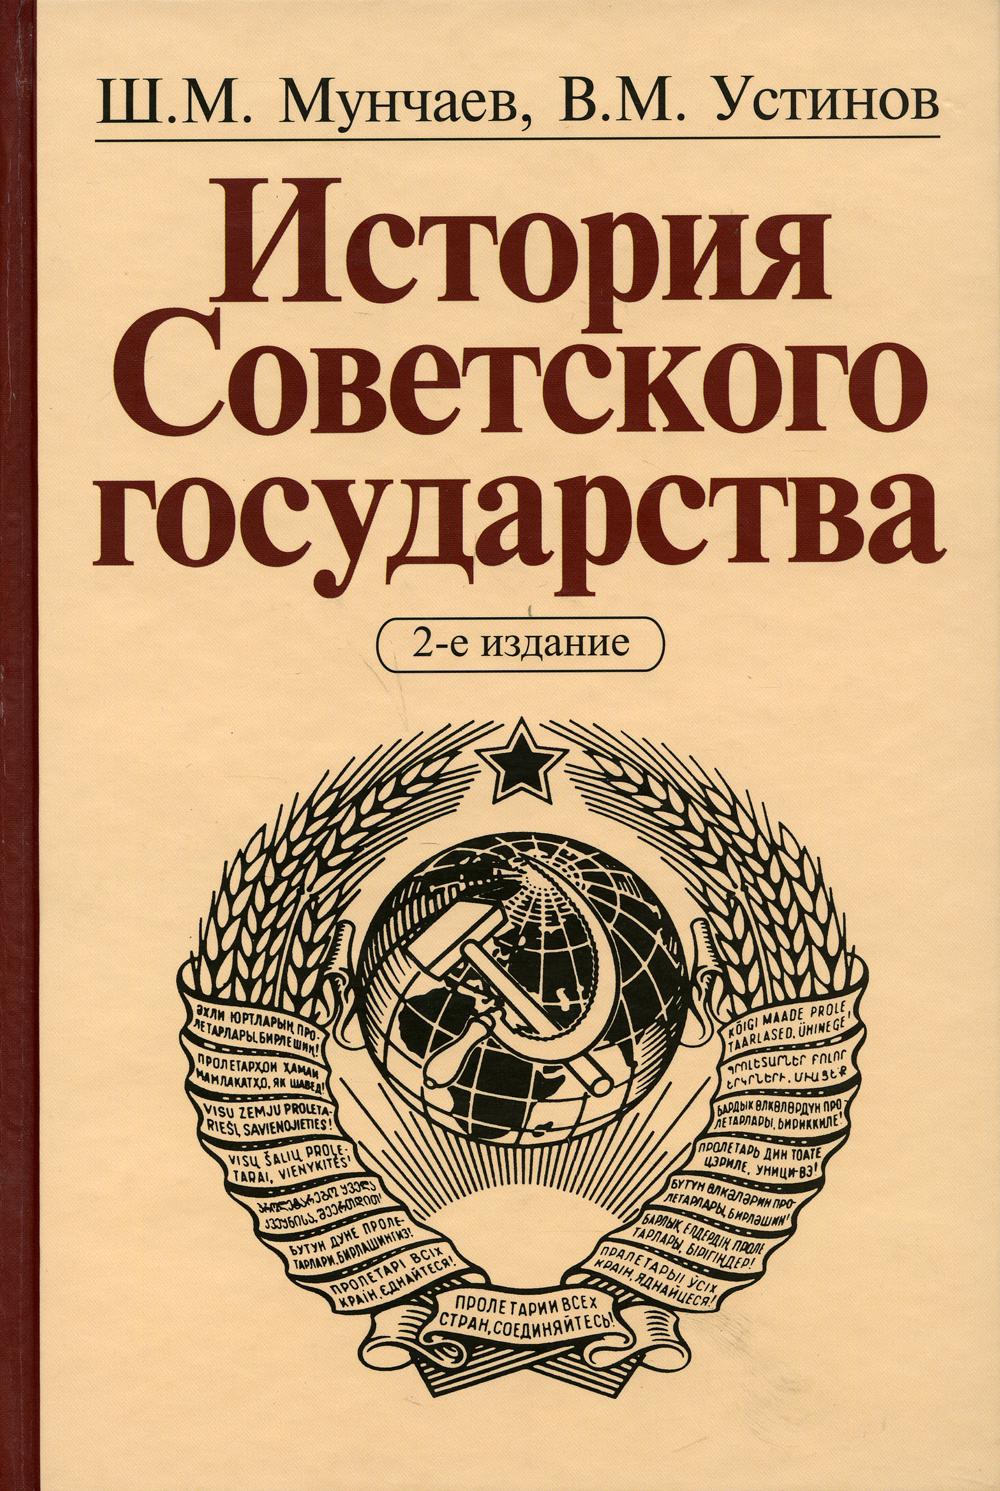 фото Книга история советского государства норма